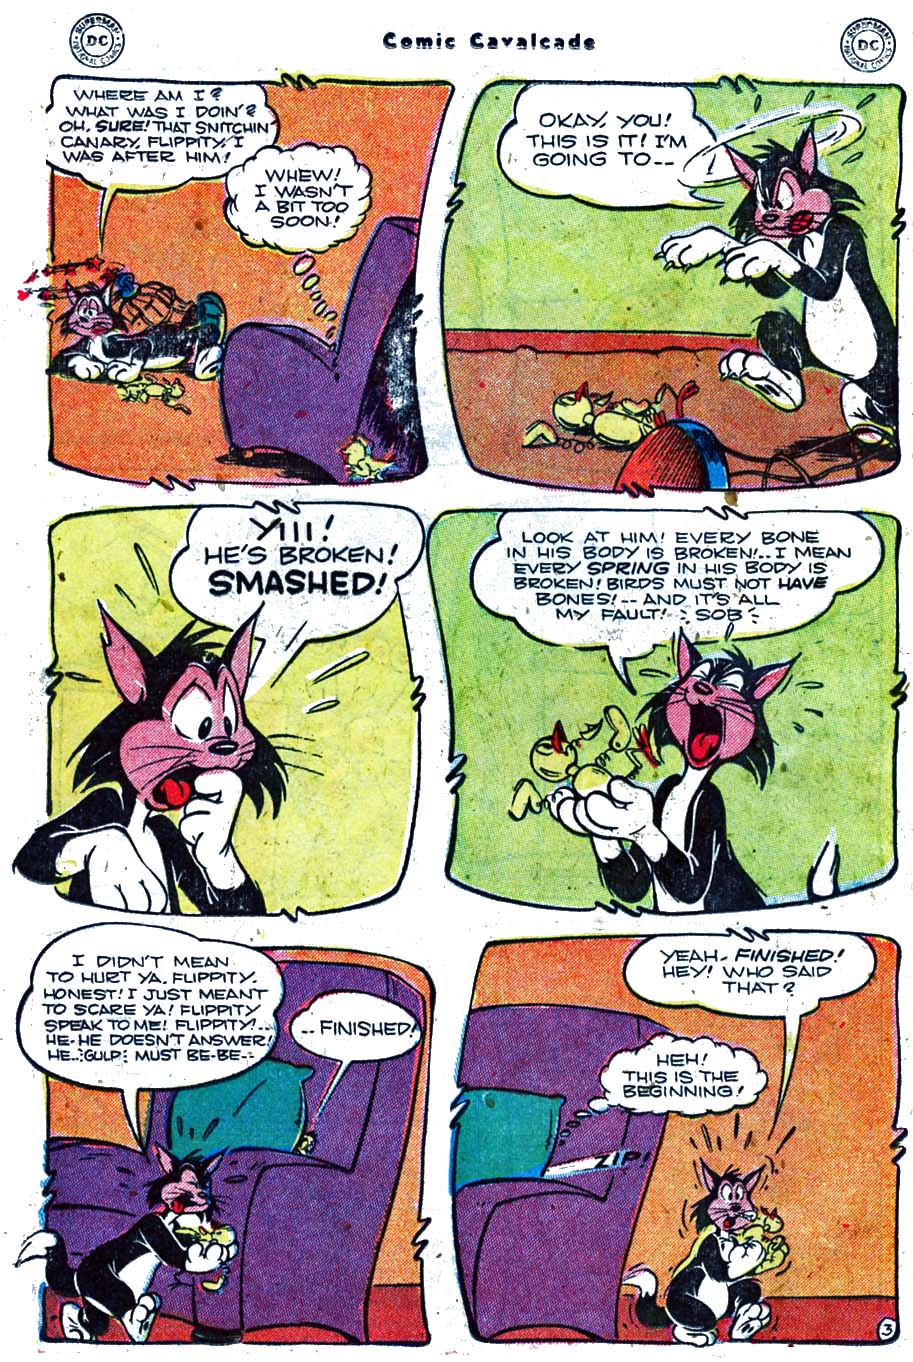 Comic Cavalcade issue 47 - Page 30